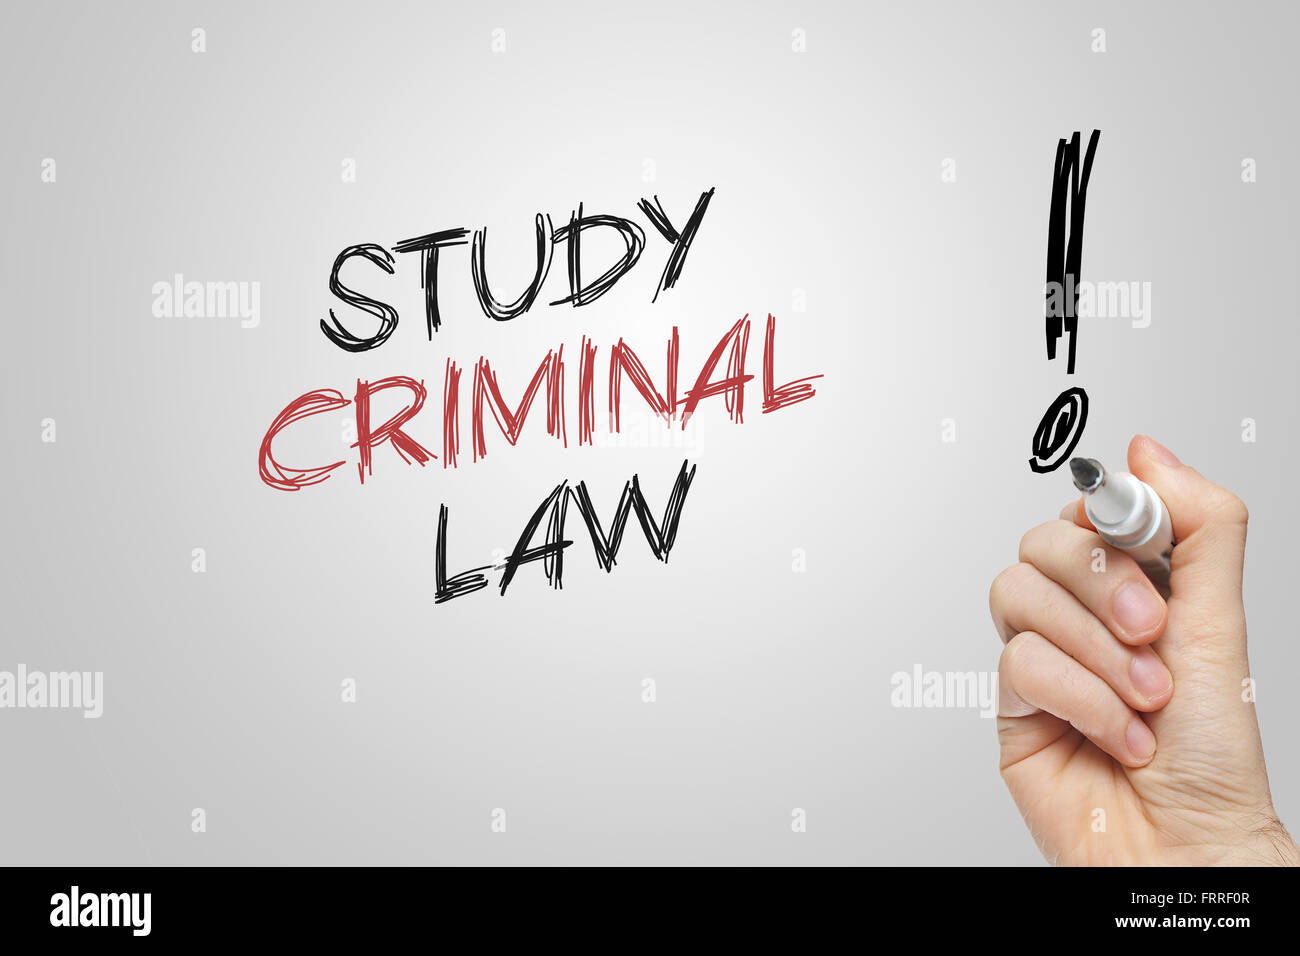 Hand writing study criminal law on grey background Stock Photo